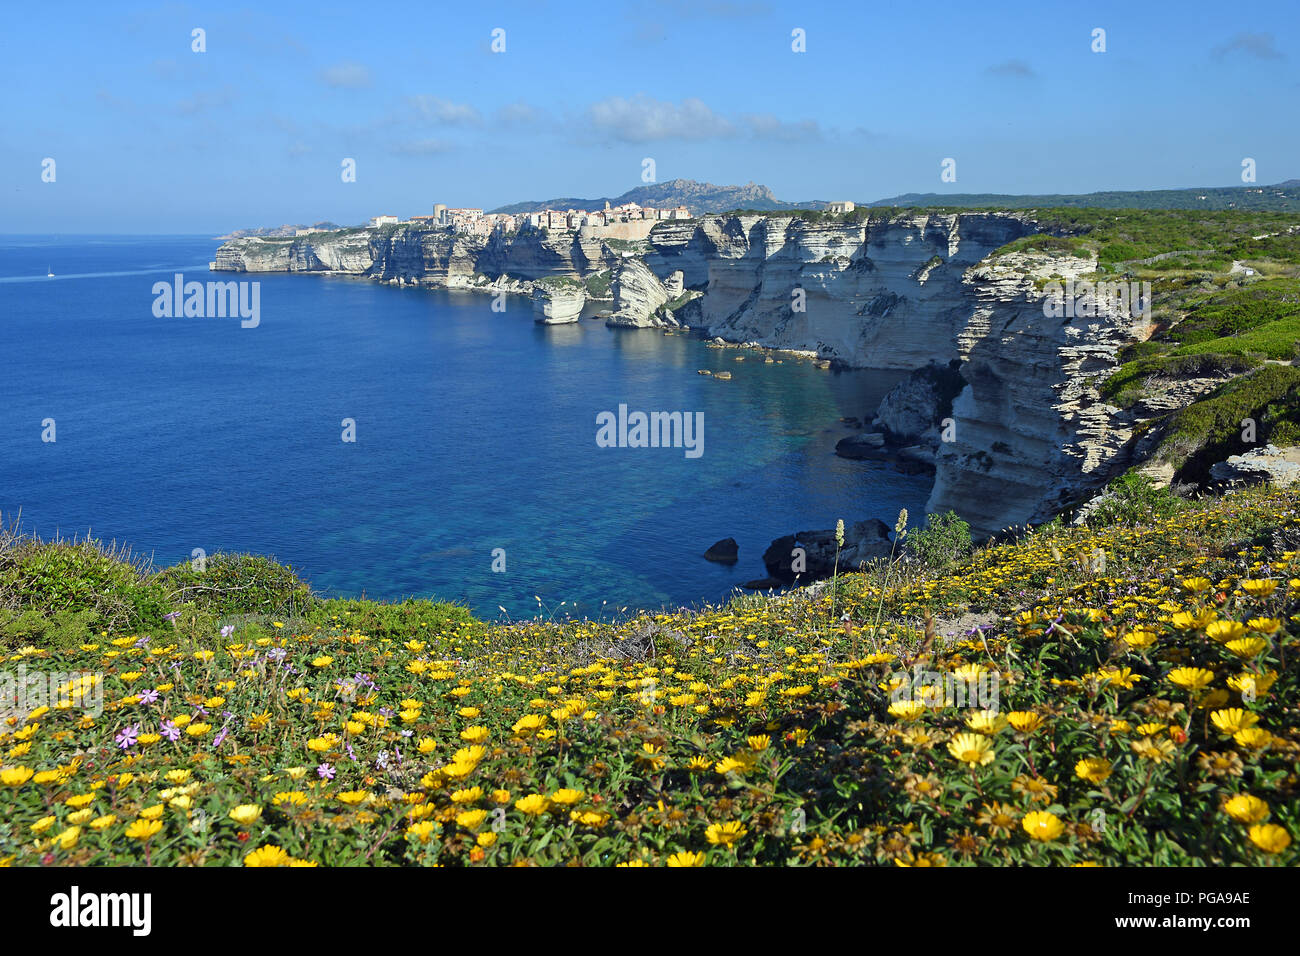 Yellow daisies (Euryops abrotanifolius) on steep cliffs, rocky coast near Bonifacio, Corsica, France Stock Photo